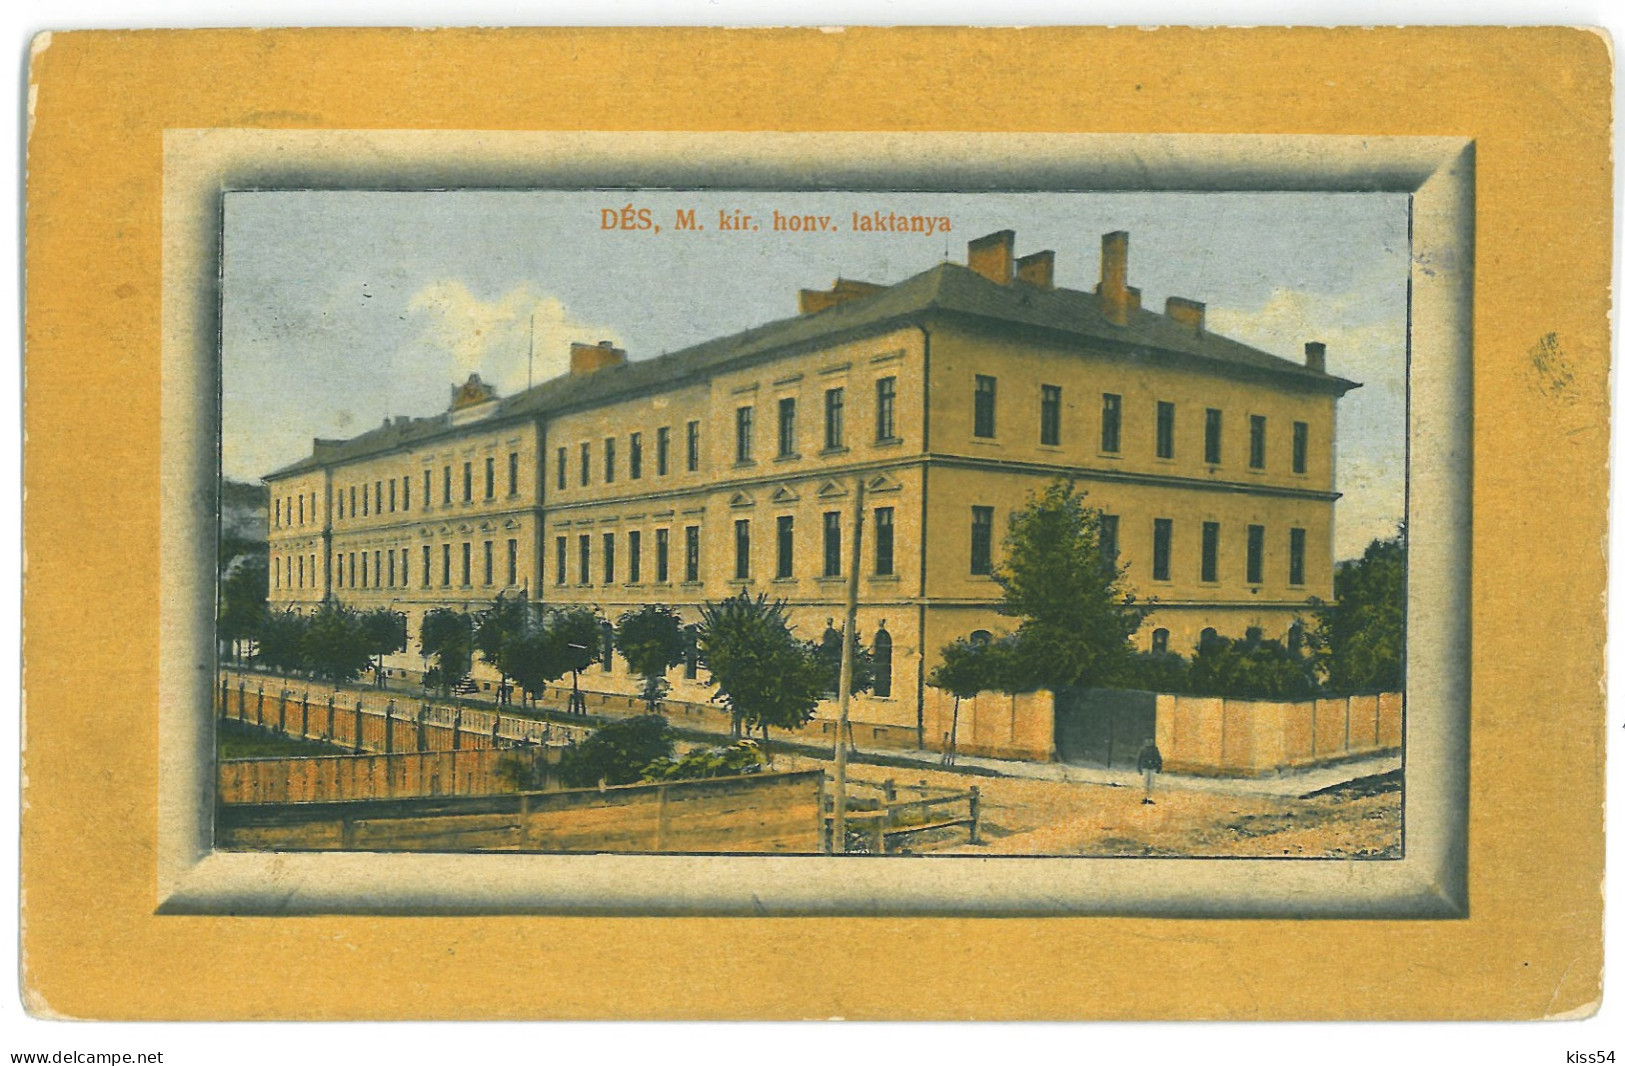 RO 69 - 22740 DEJ, Cluj, Romania - Old Postcard - Used - 1913 - Rumänien